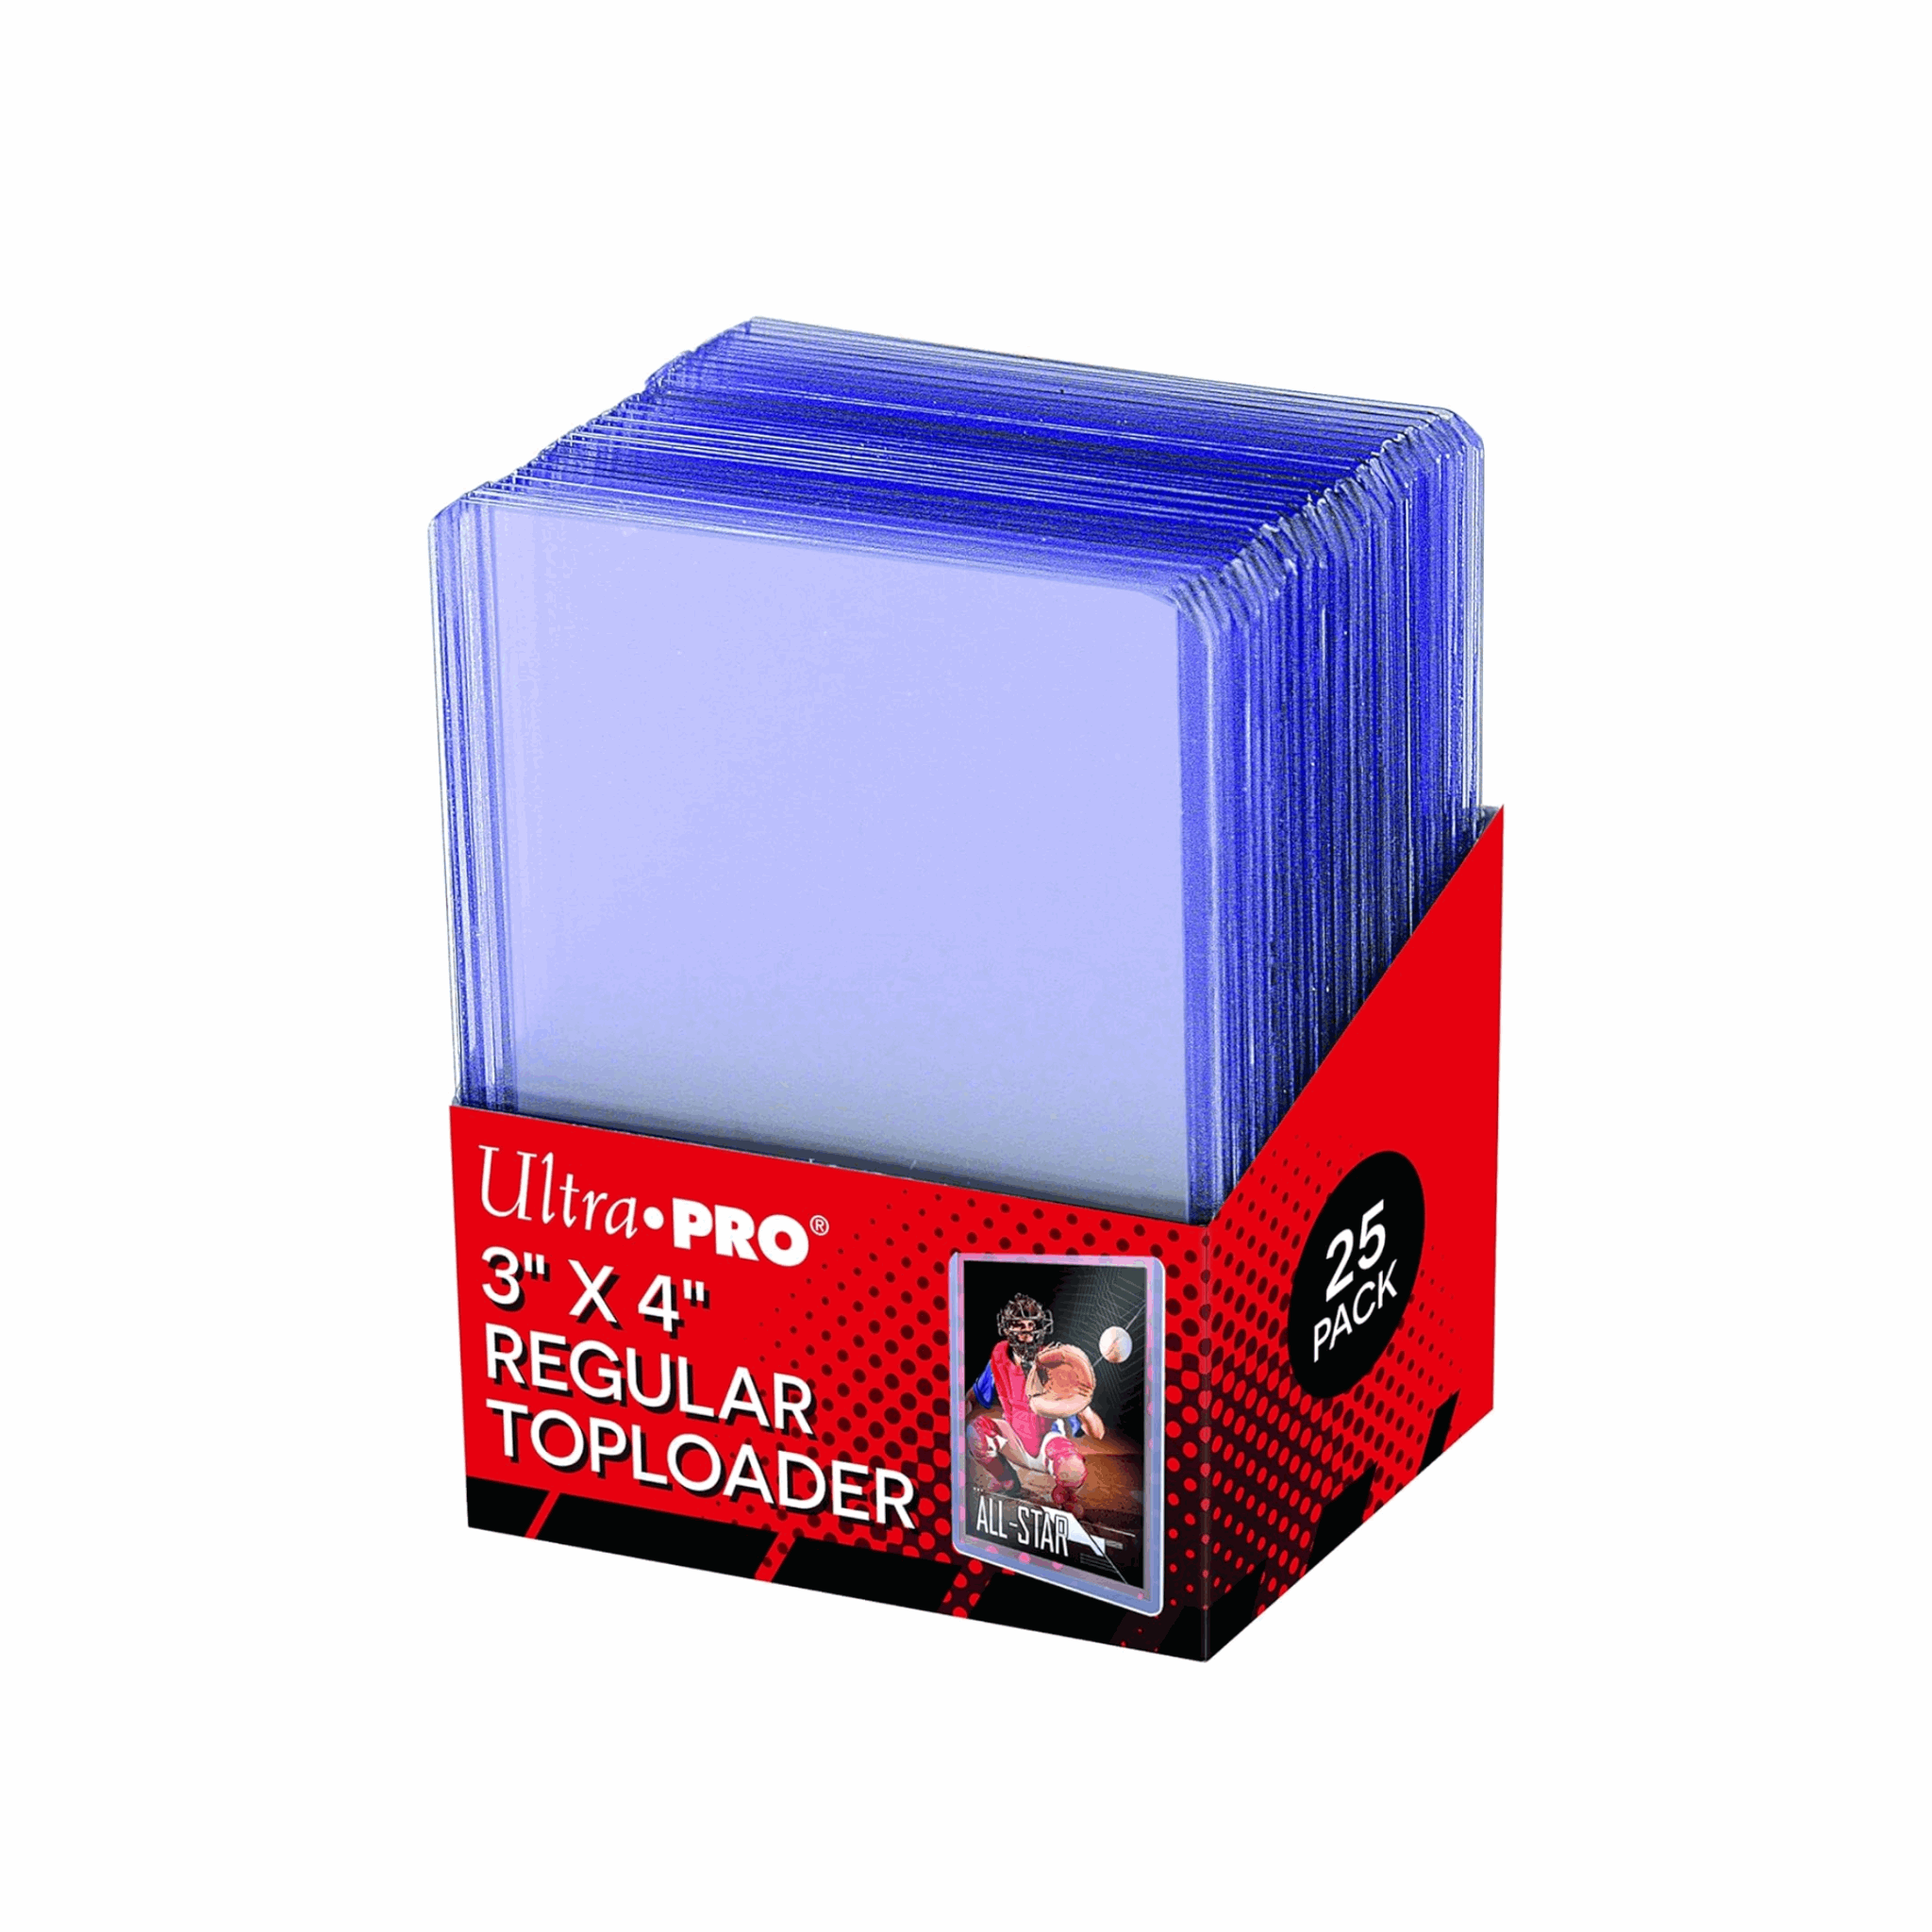 Ultra Pro - 3" x 4" Regular Top Loader | 25 stk - CardCosmos